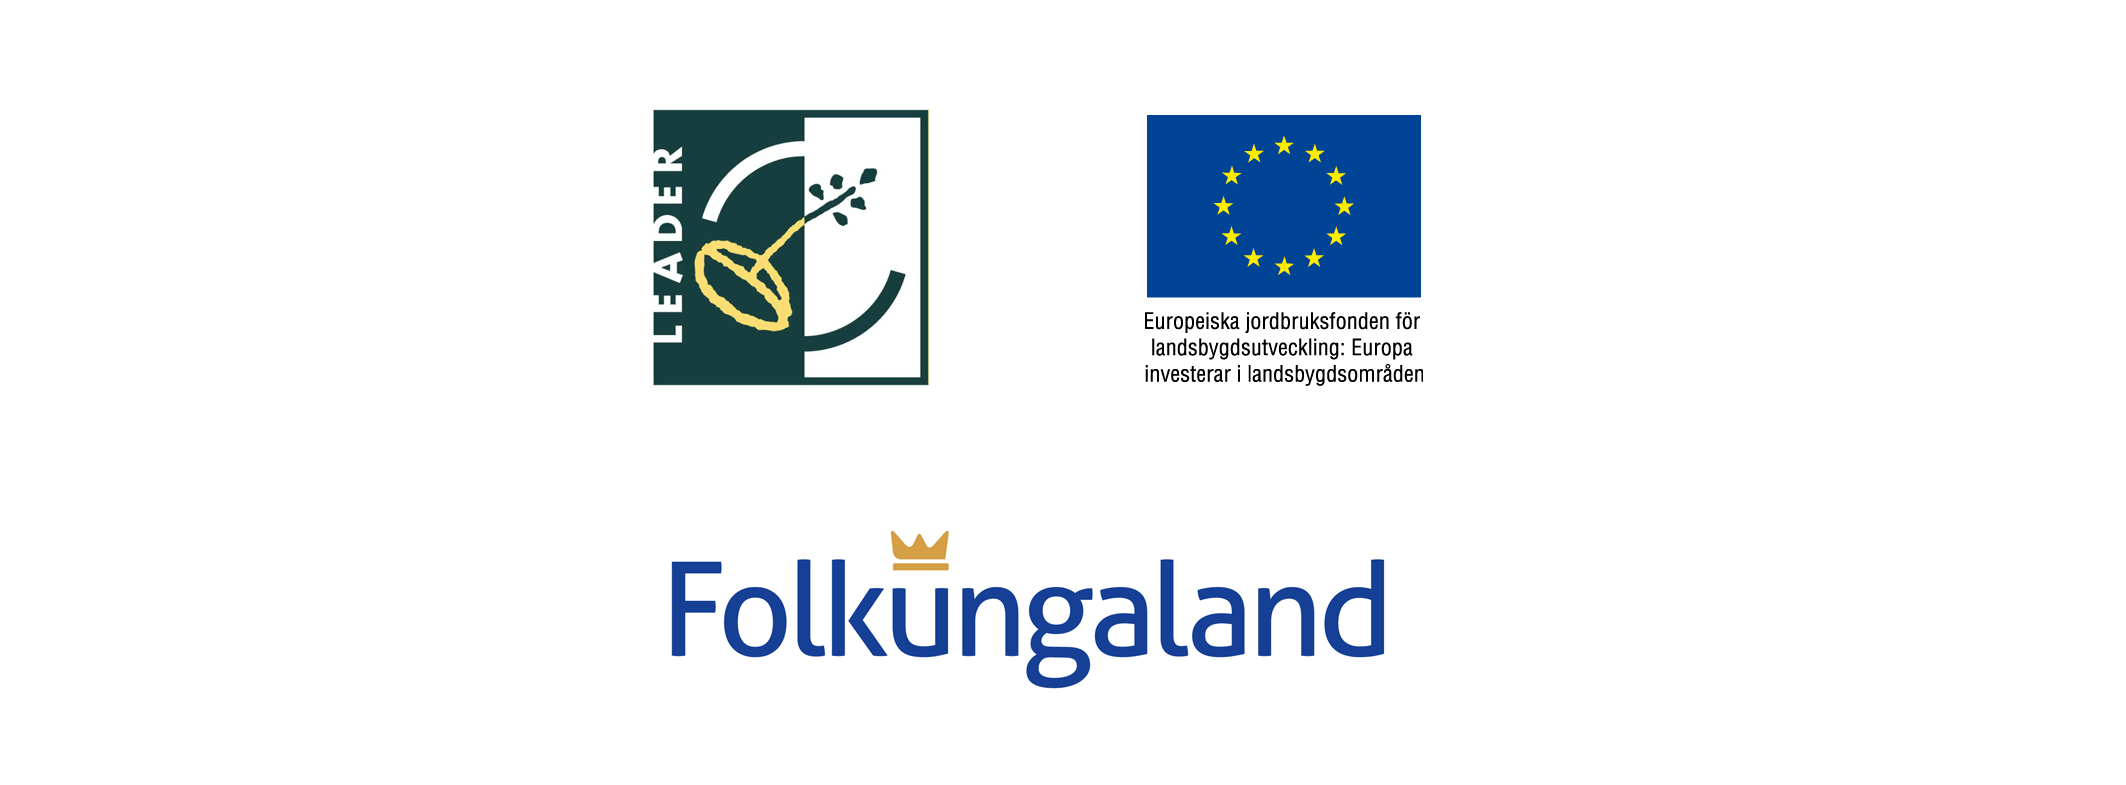 Leader Folkungaland